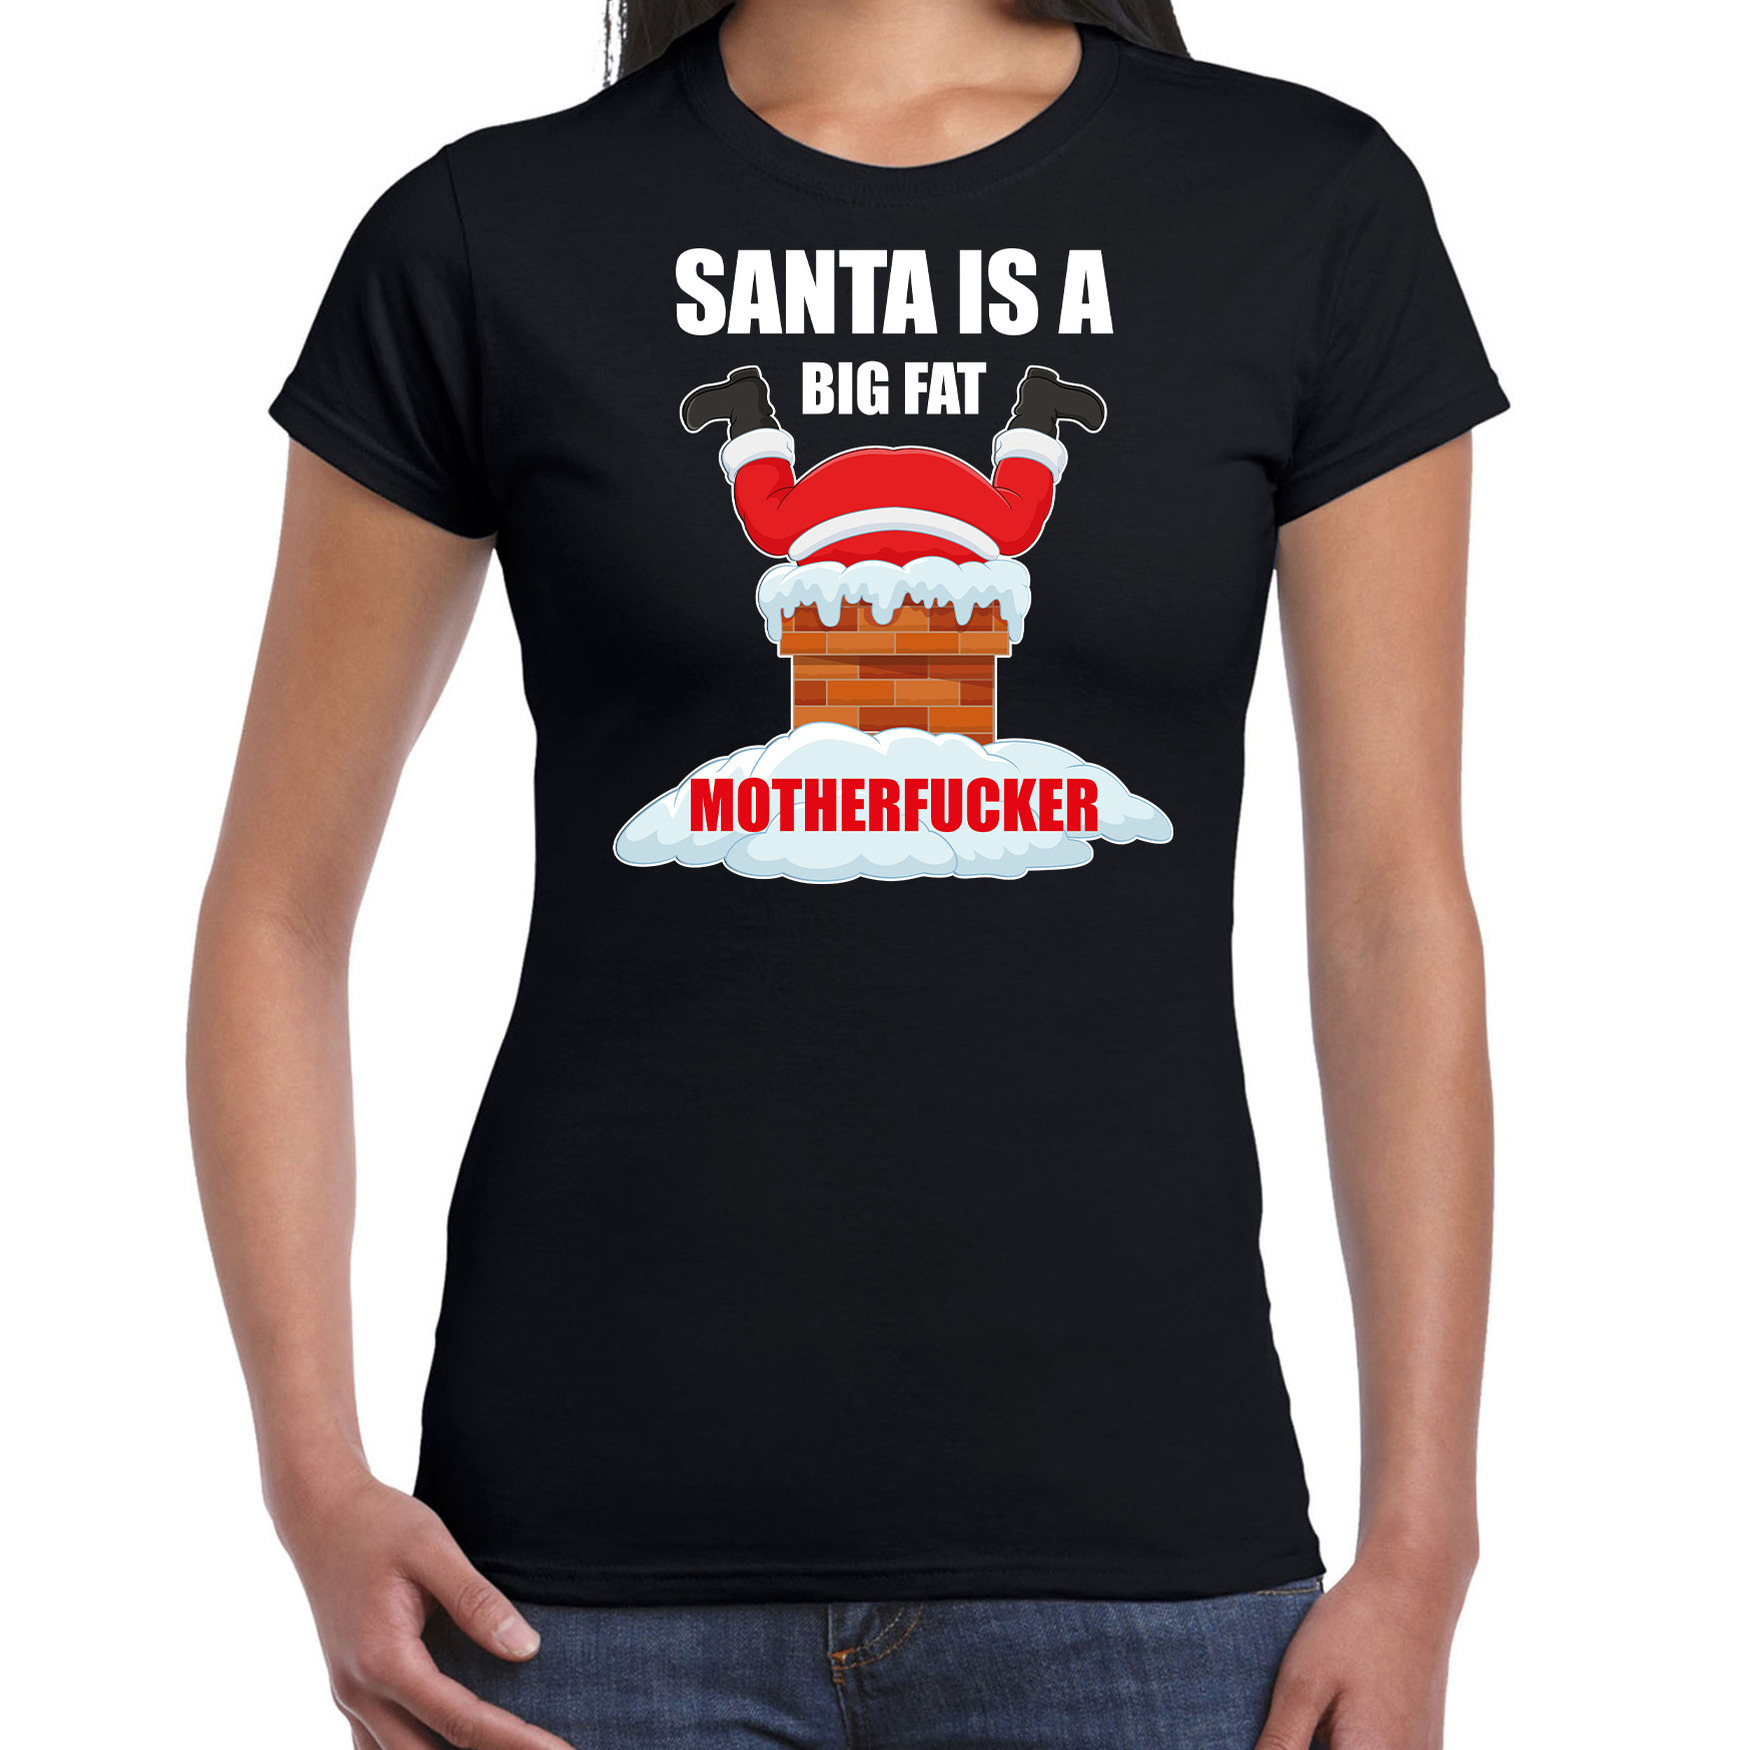 Fout Kerstshirt - outfit Santa is a big fat motherfucker zwart voor dames